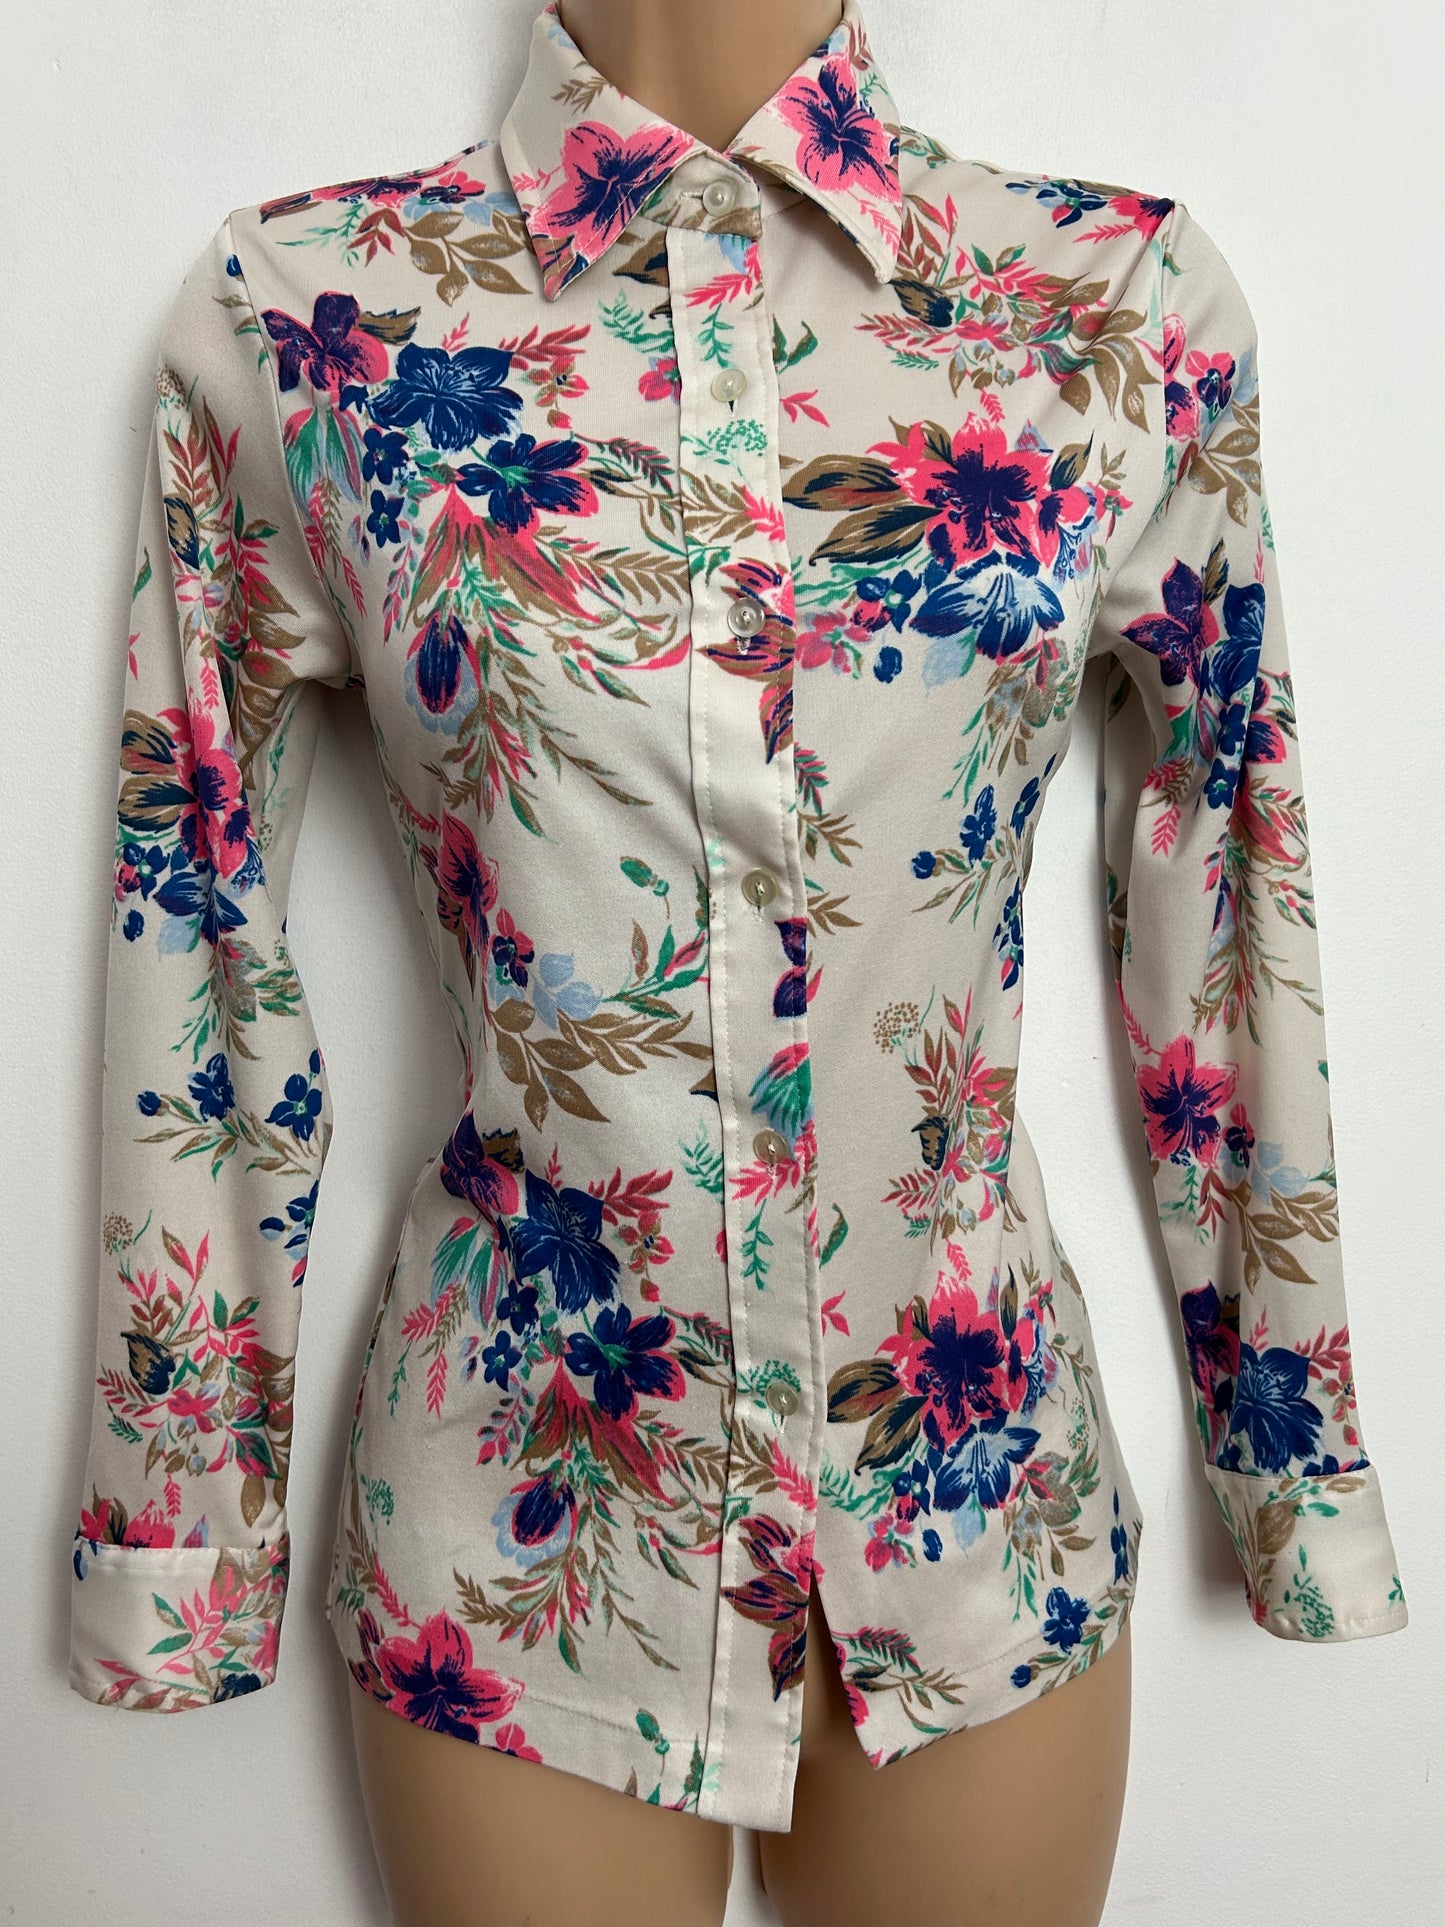 Vintage 1970s UK Size 8 Off White Blue & Pink Floral Print Long Sleeve Shirt